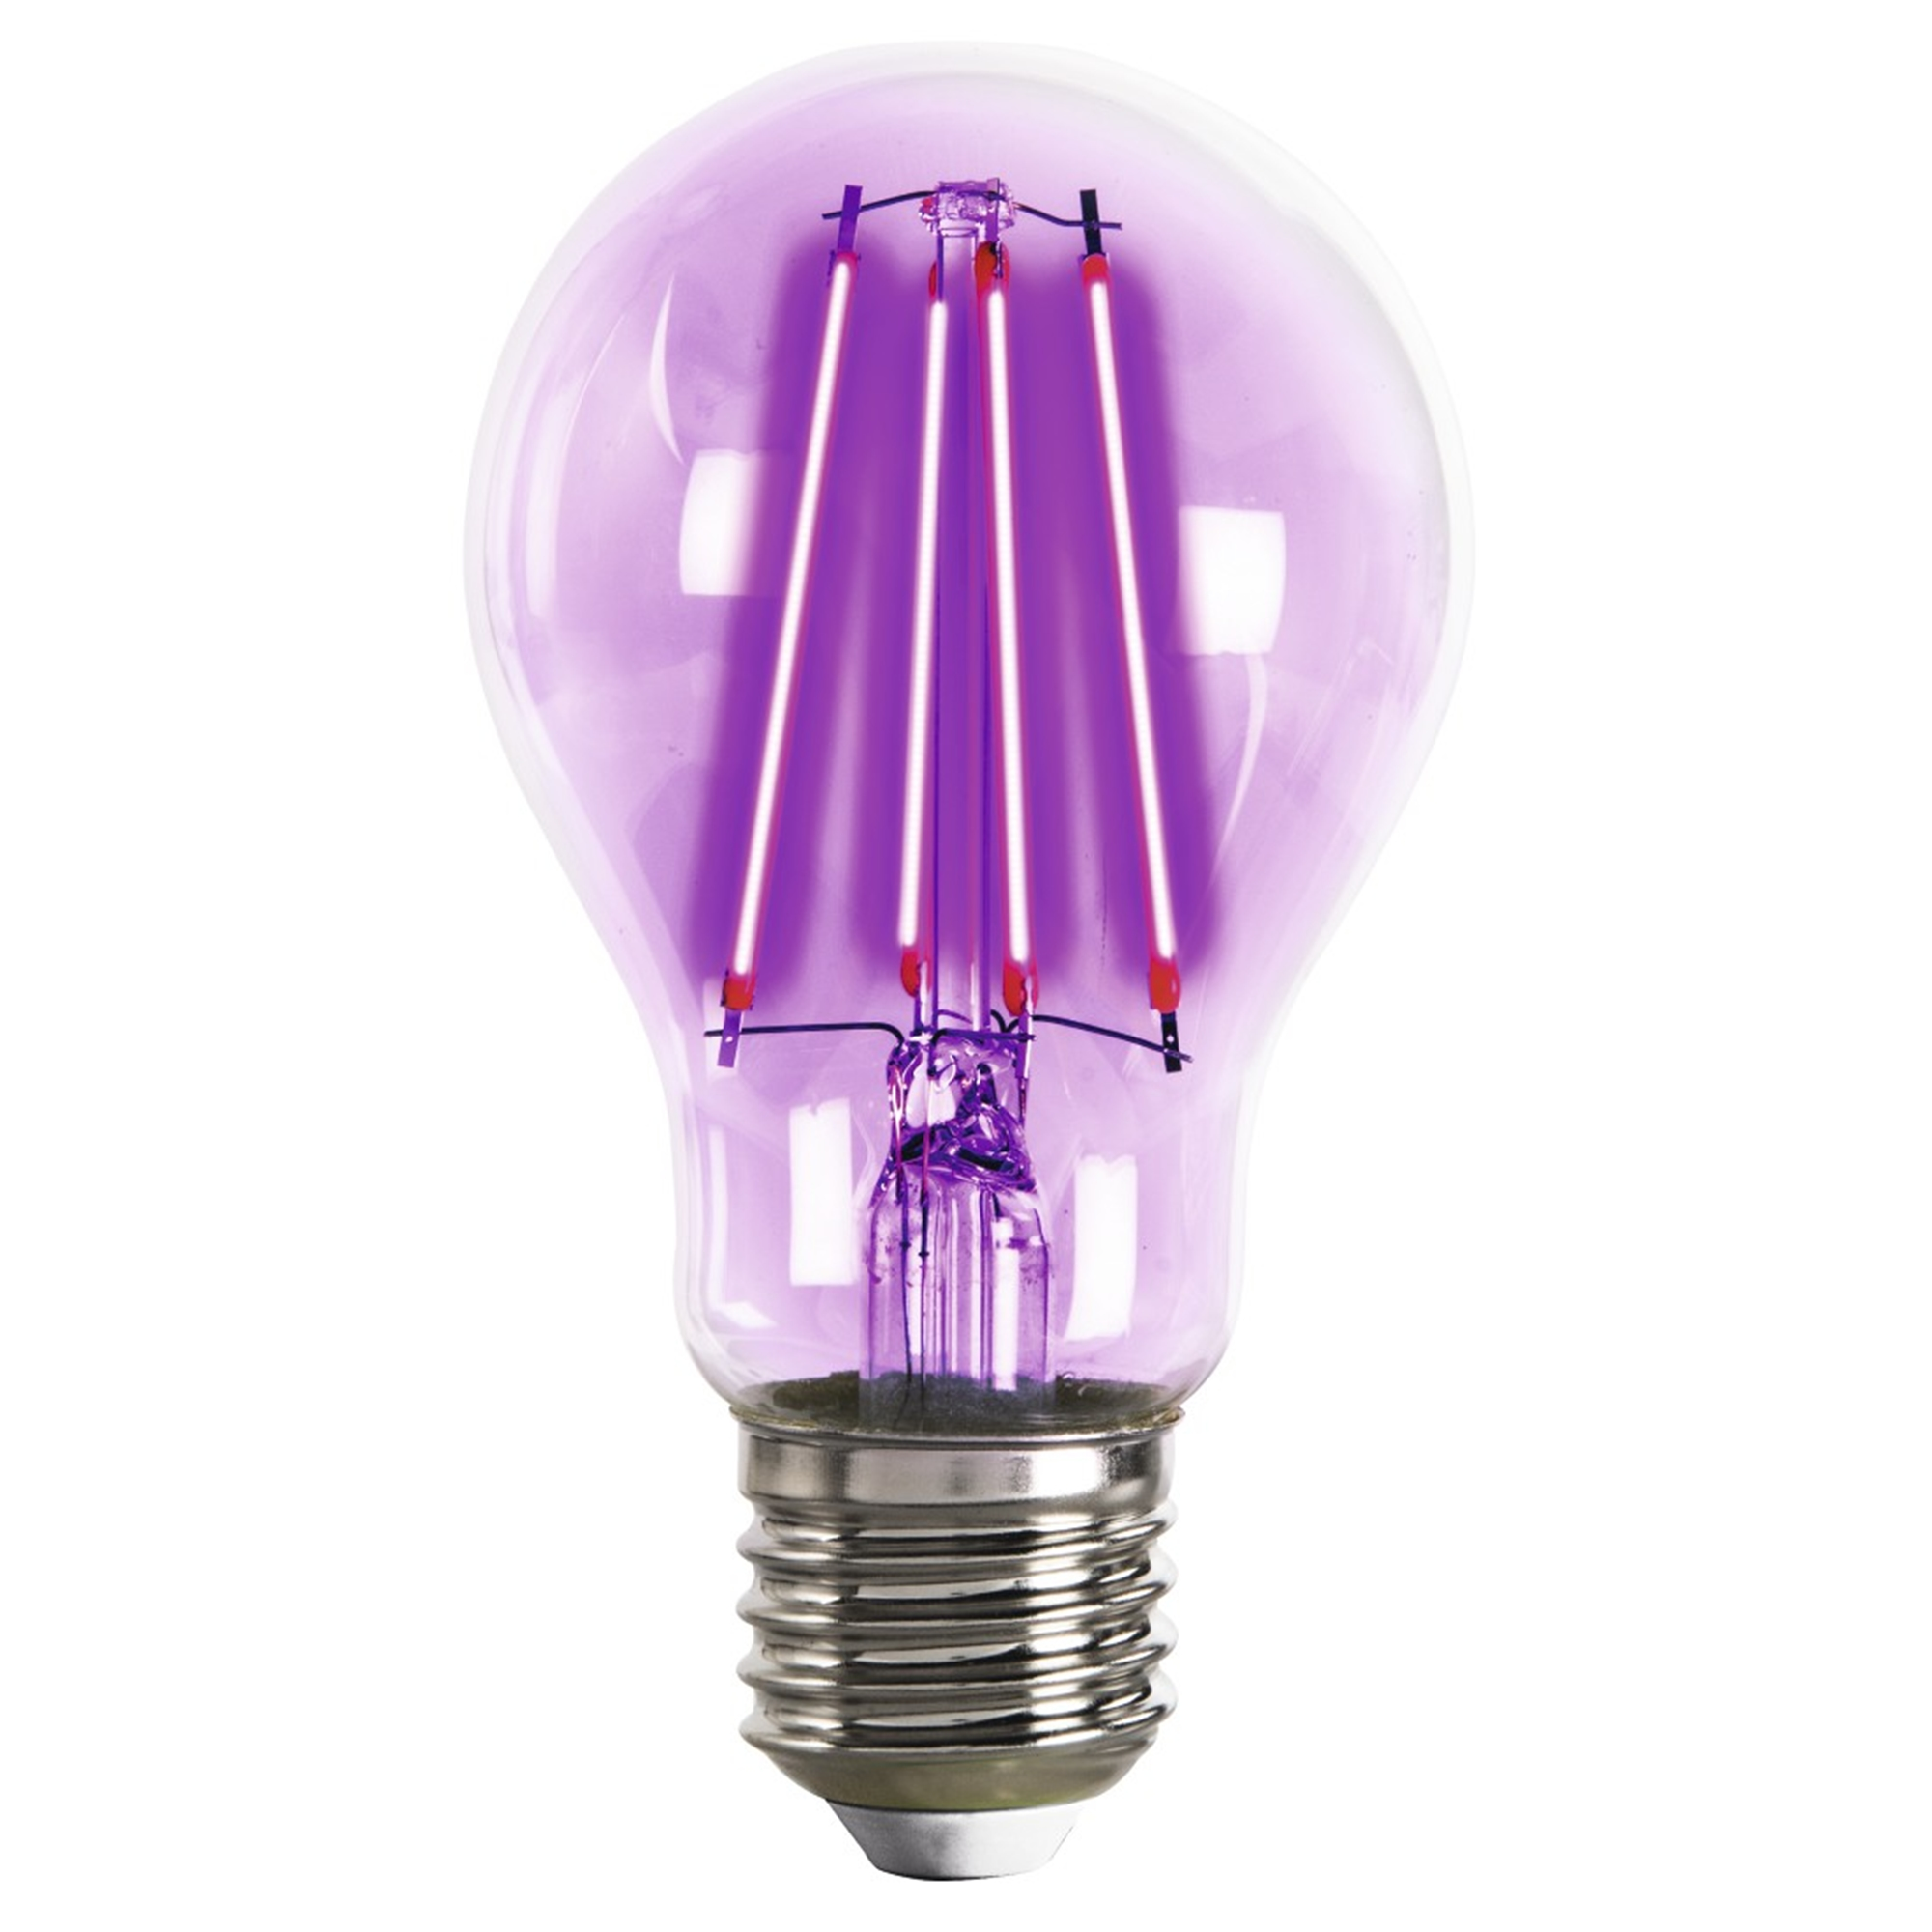 Violett XAVAX E27, 8W LED-Lampe Pflanzen-Wachstumslampe, E27